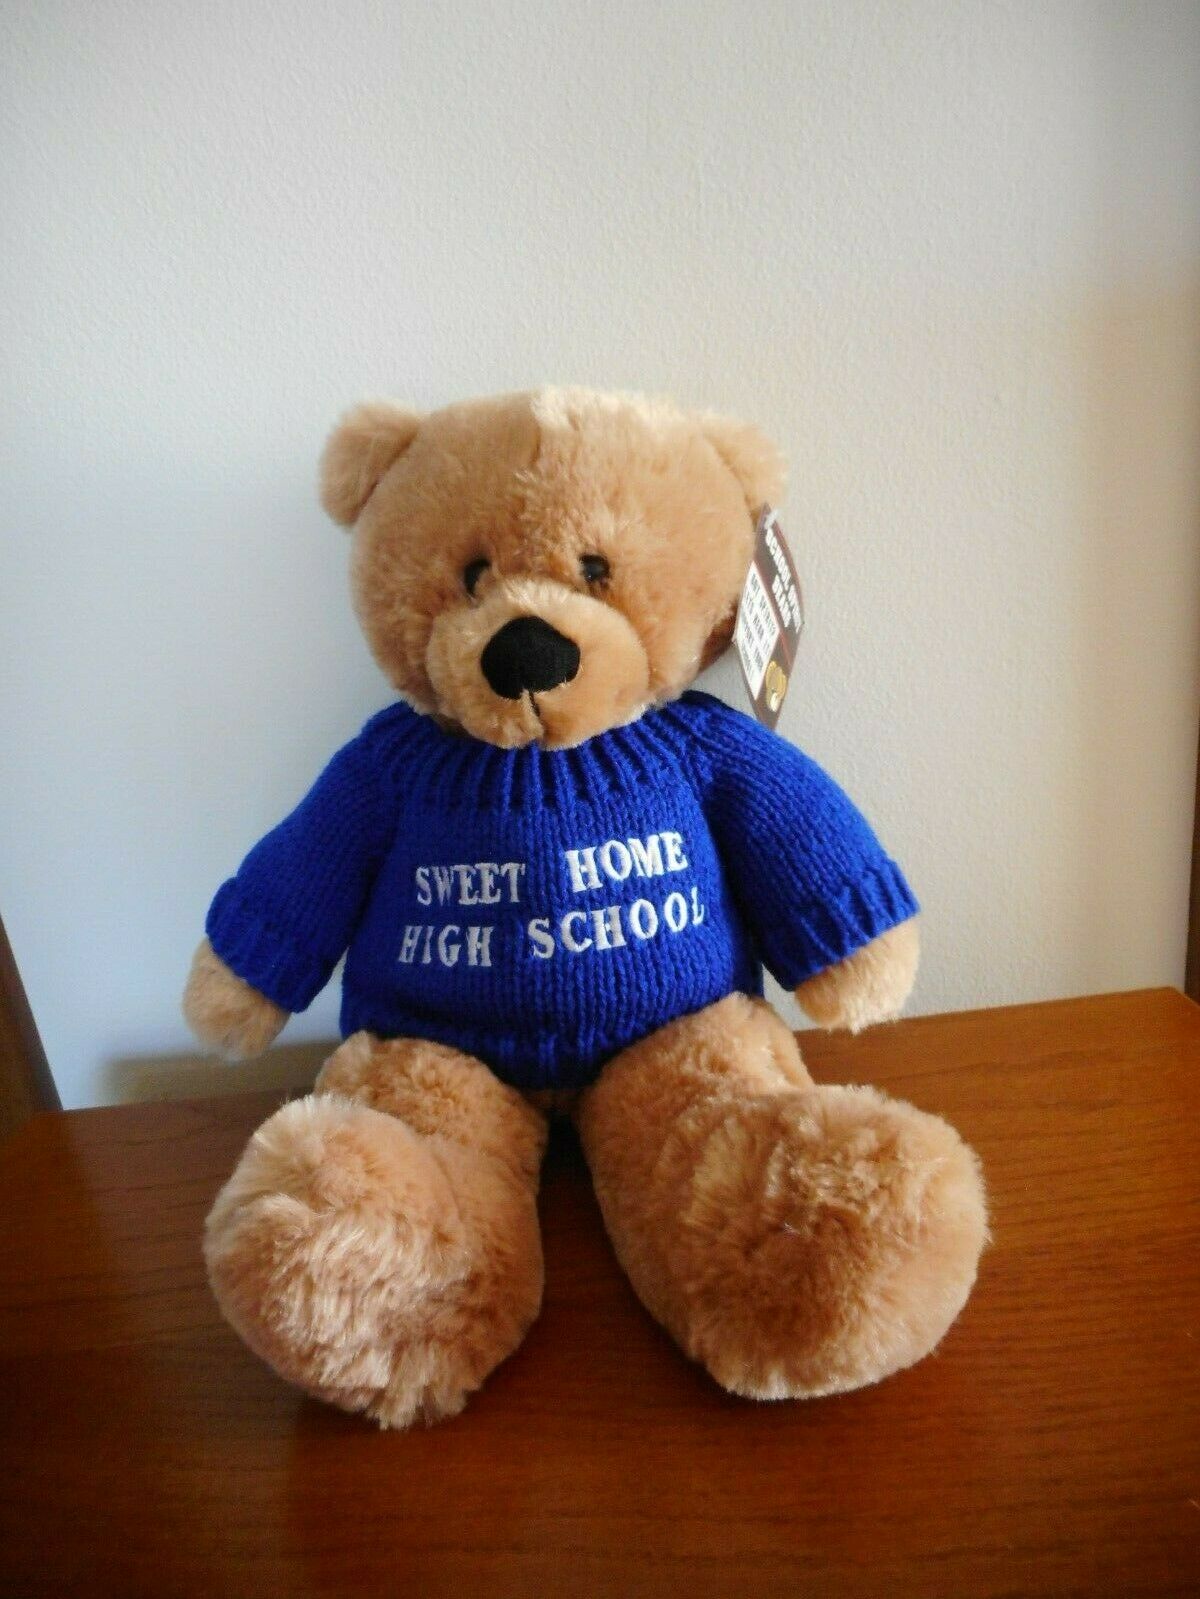 Sweet Home High School Plush 15" School Spirit Bear With Blue Sweater, Nwt